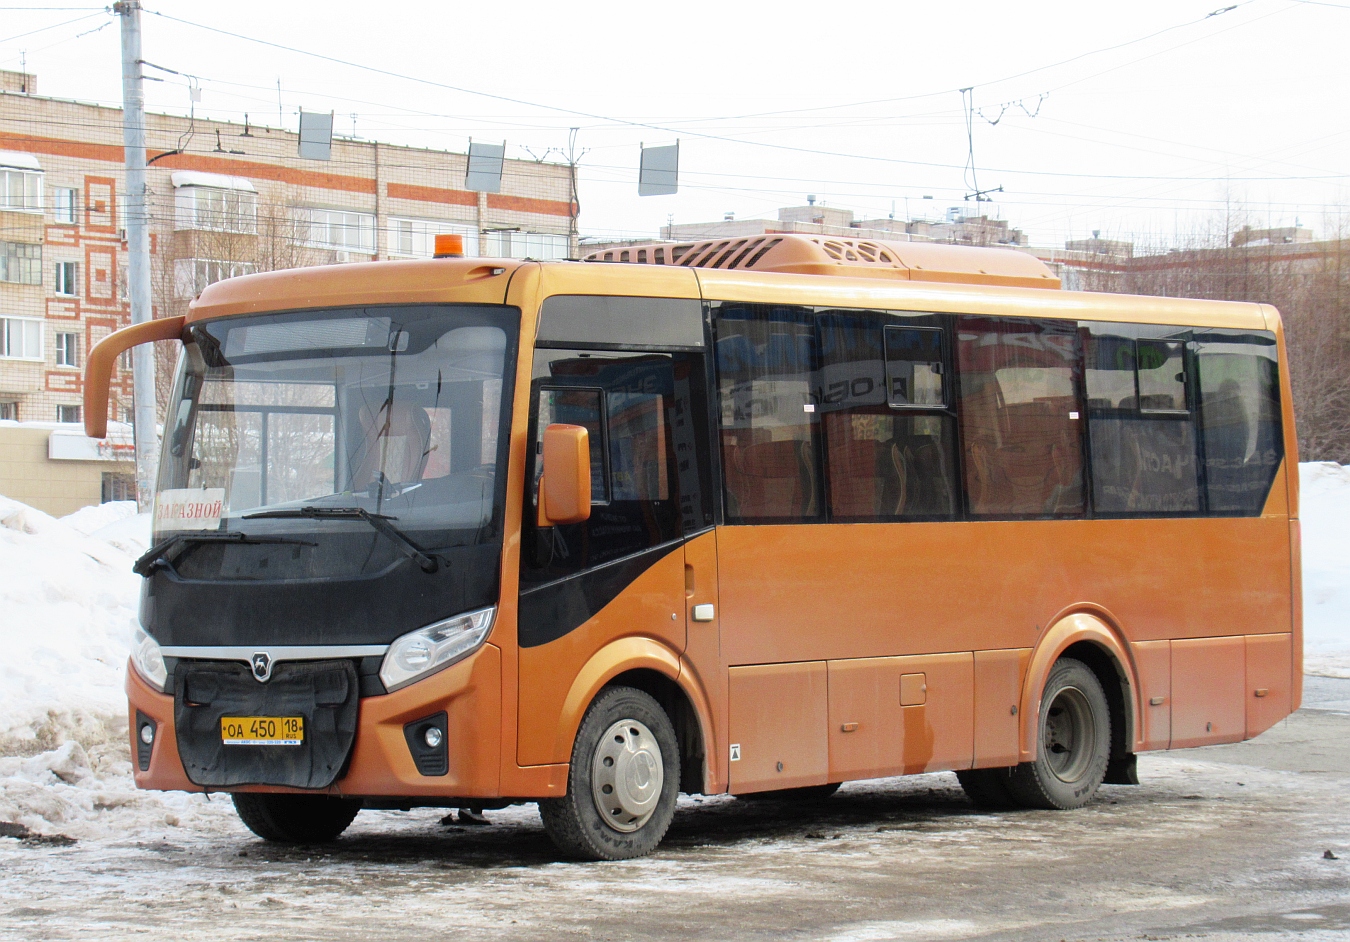 Удмуртыя, ПАЗ-320405-04 "Vector Next" (межгород) № ОА 450 18